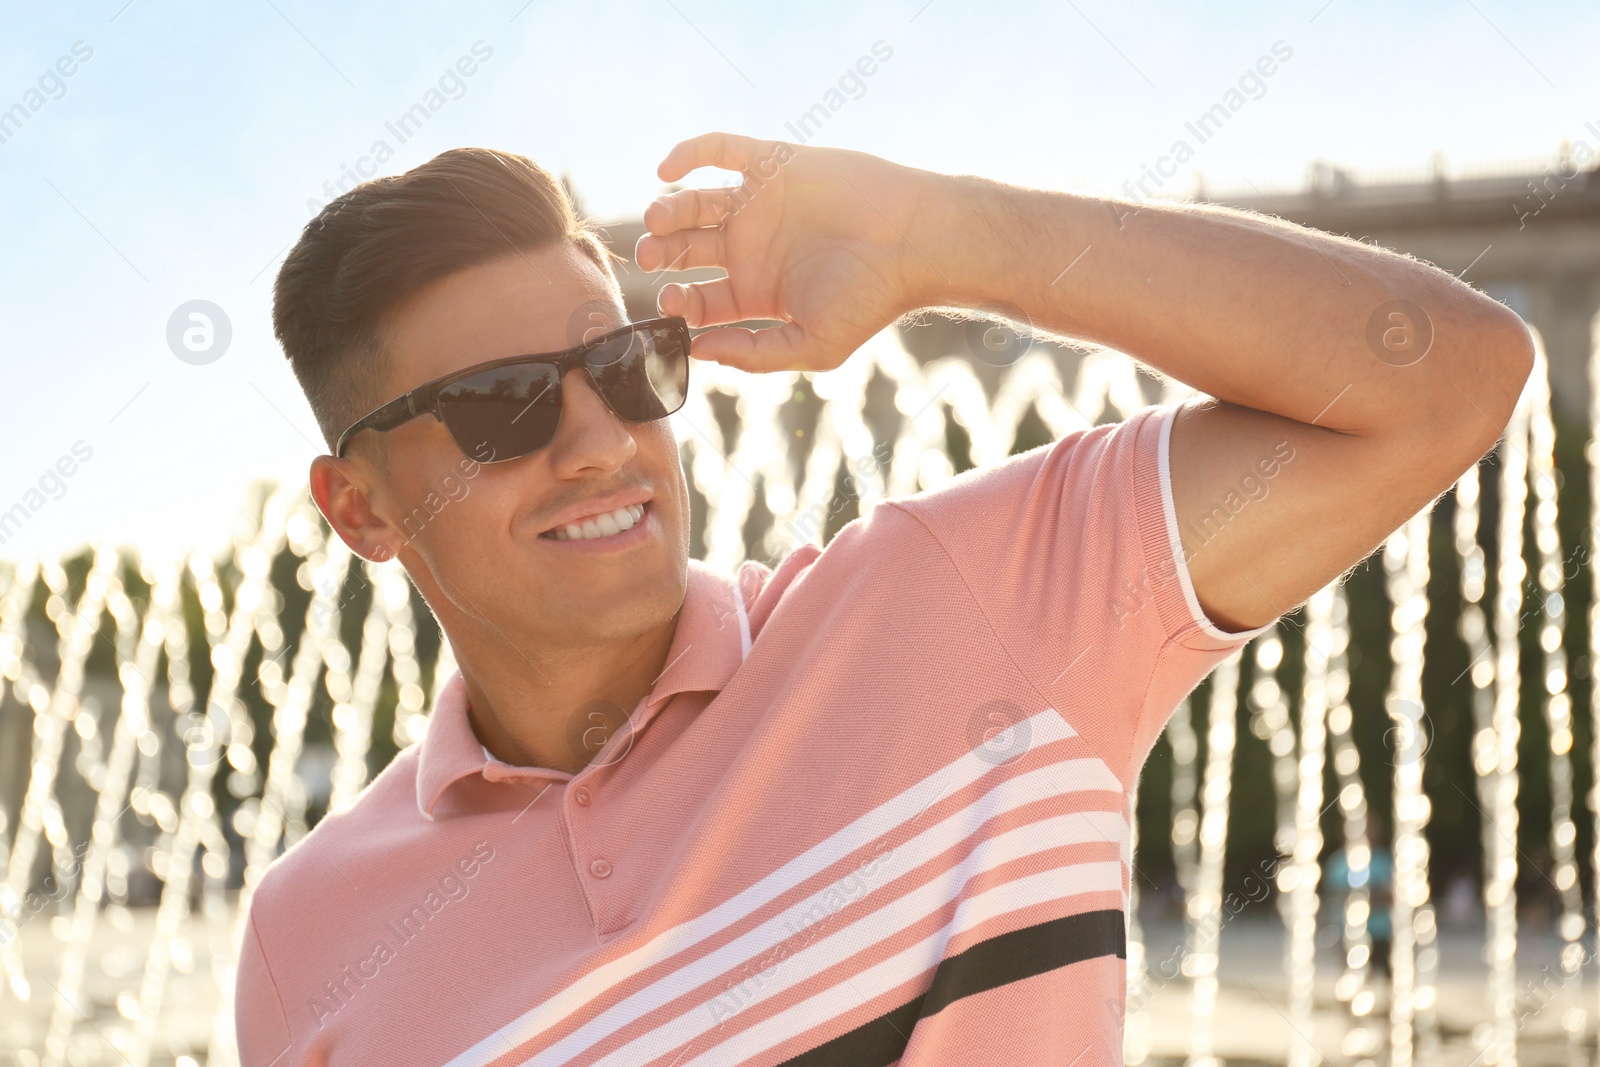 Photo of Handsome man wearing stylish sunglasses on city street